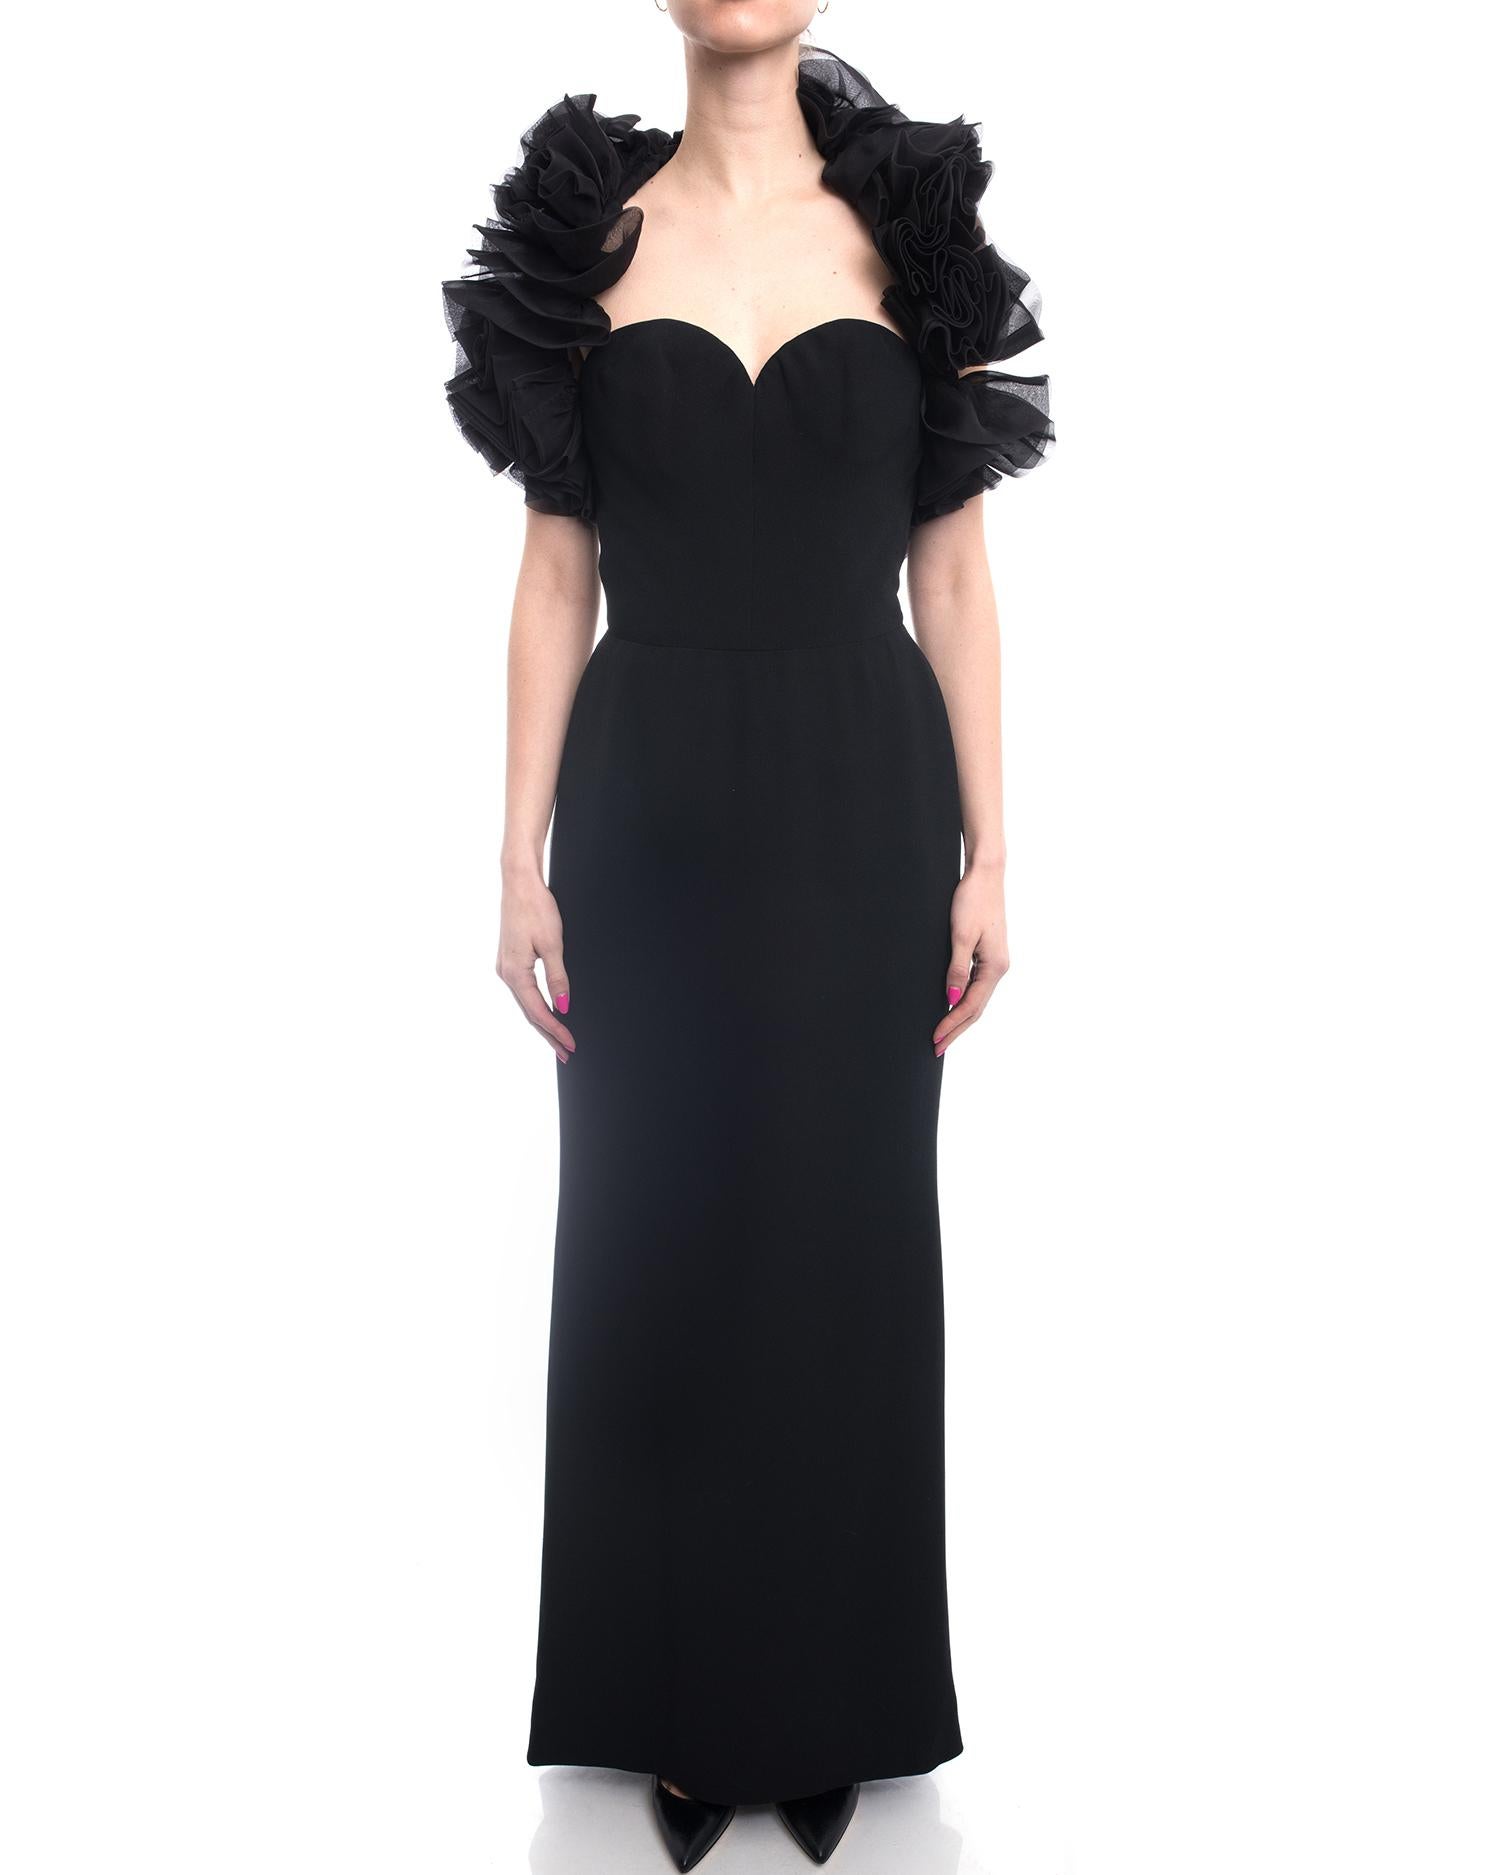 Yves Saint Laurent Haute Couture Vintage 1990’s Black Ruffle Evening Gown For Sale 1